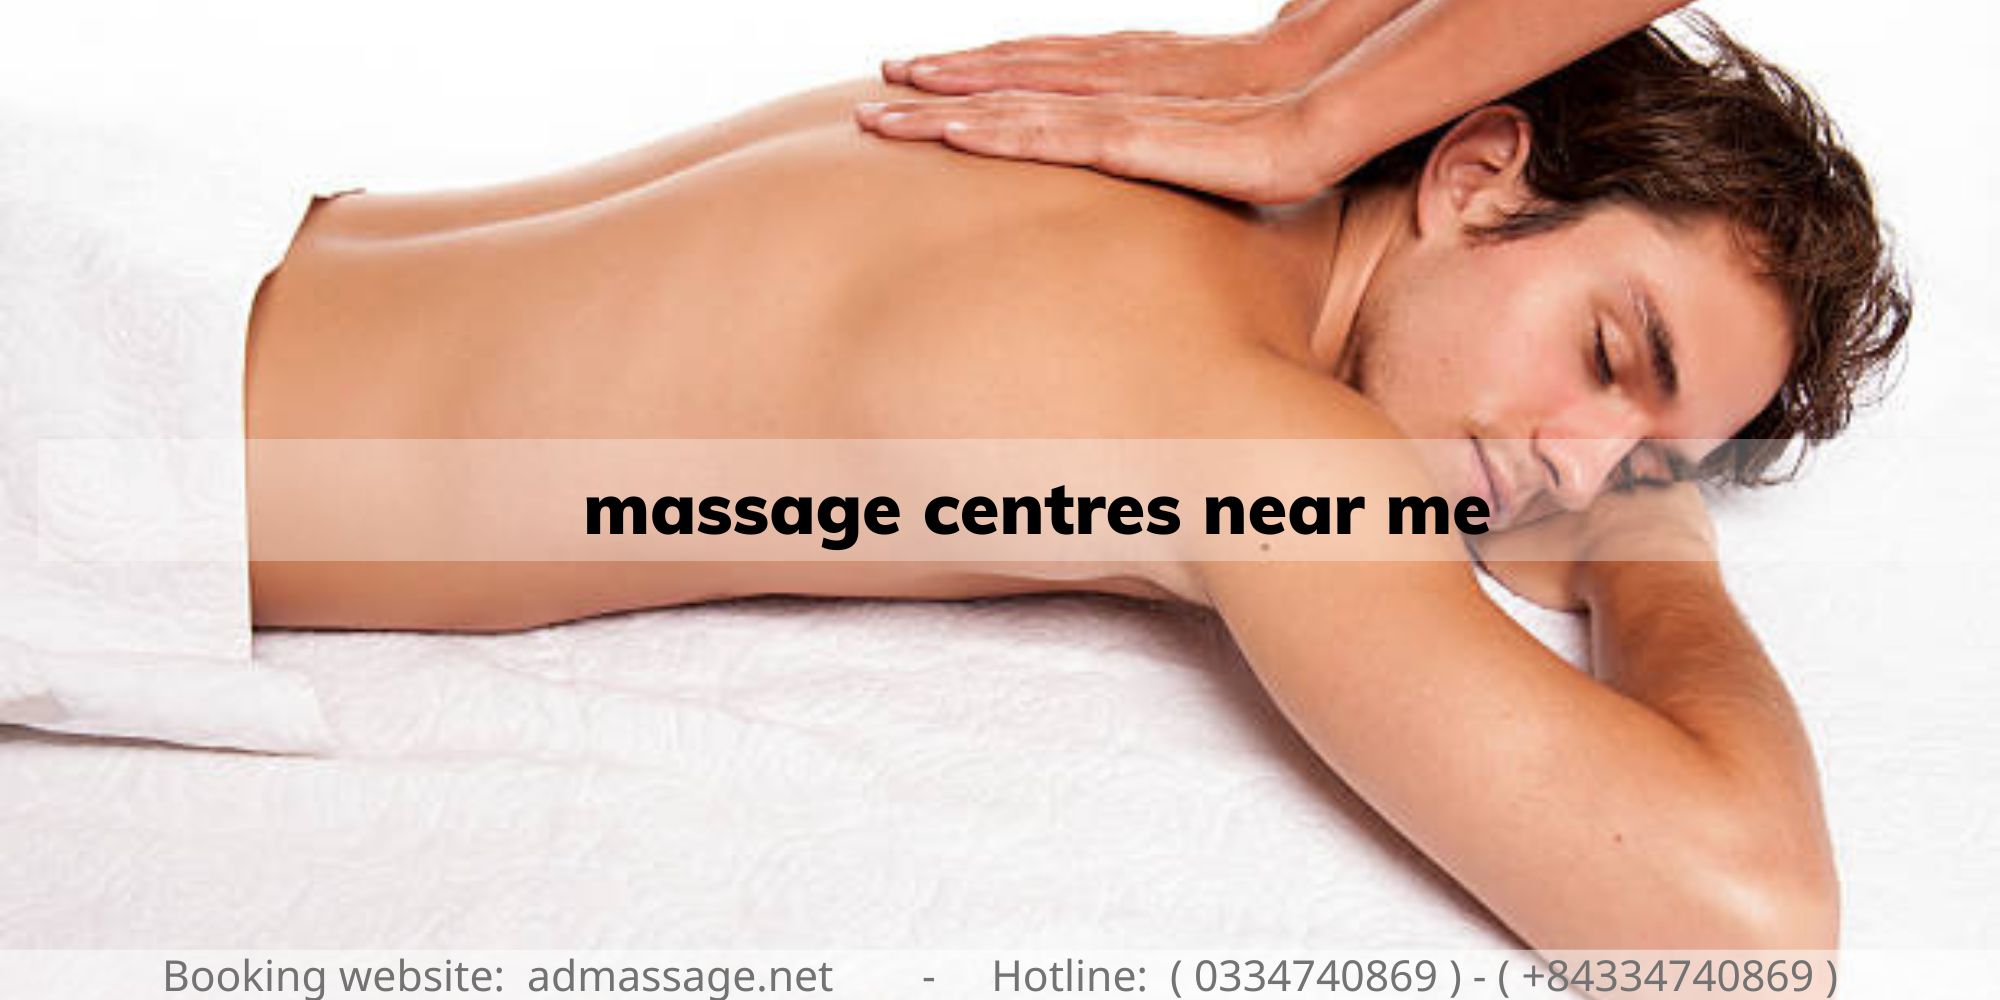 massage centres near me